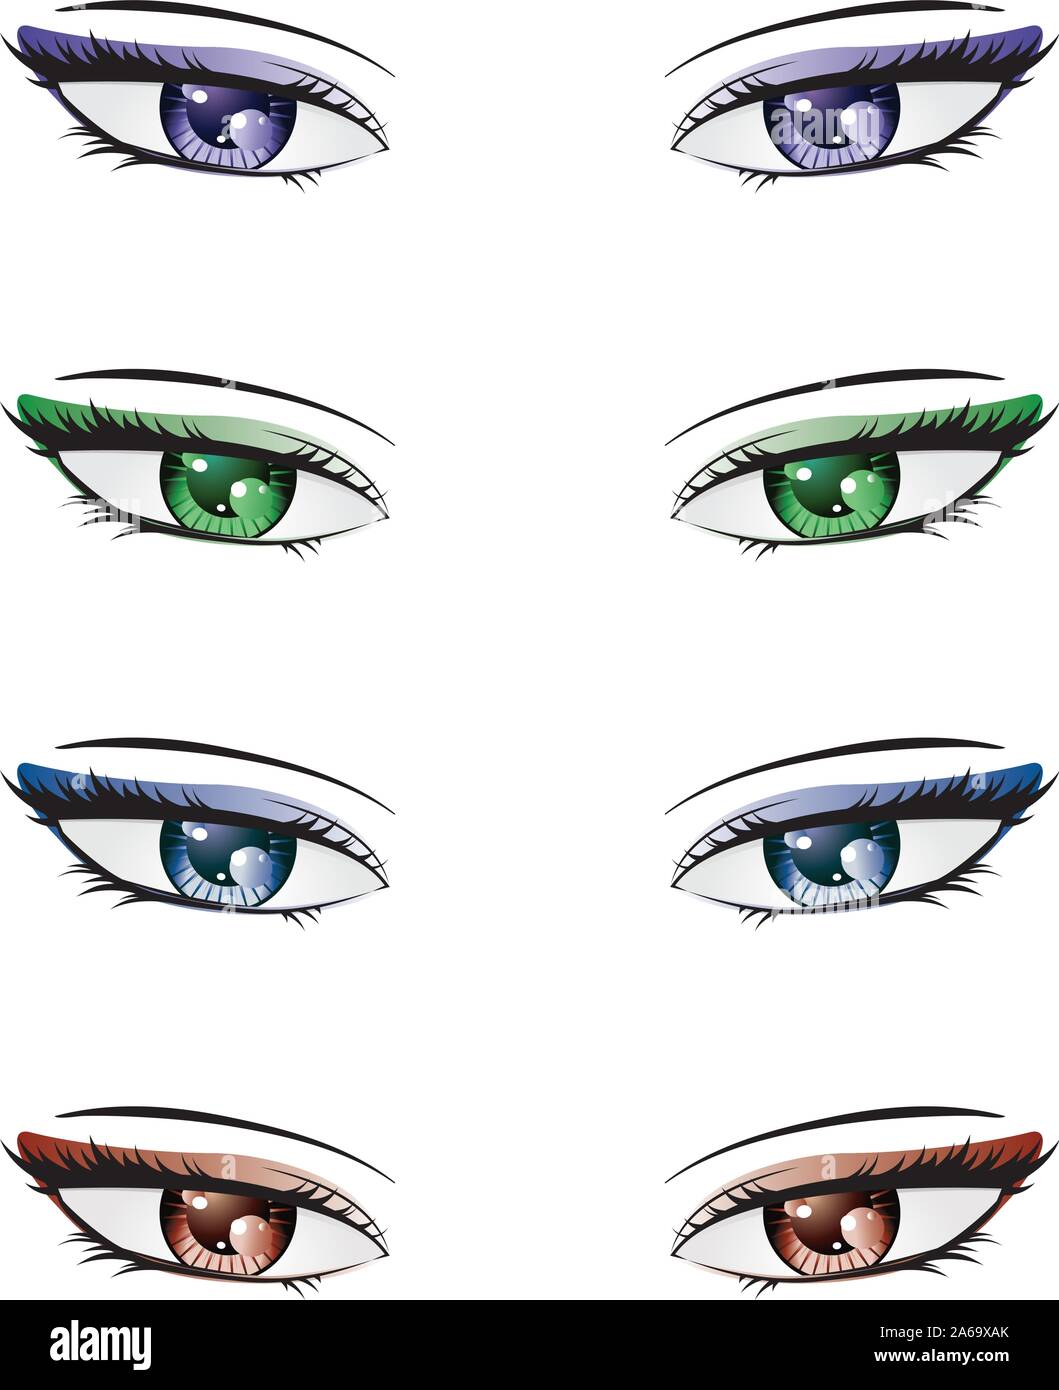 Tutorial of drawing human eye Eye in anime style female eyelashes Stock  Illustration  Adobe Stock